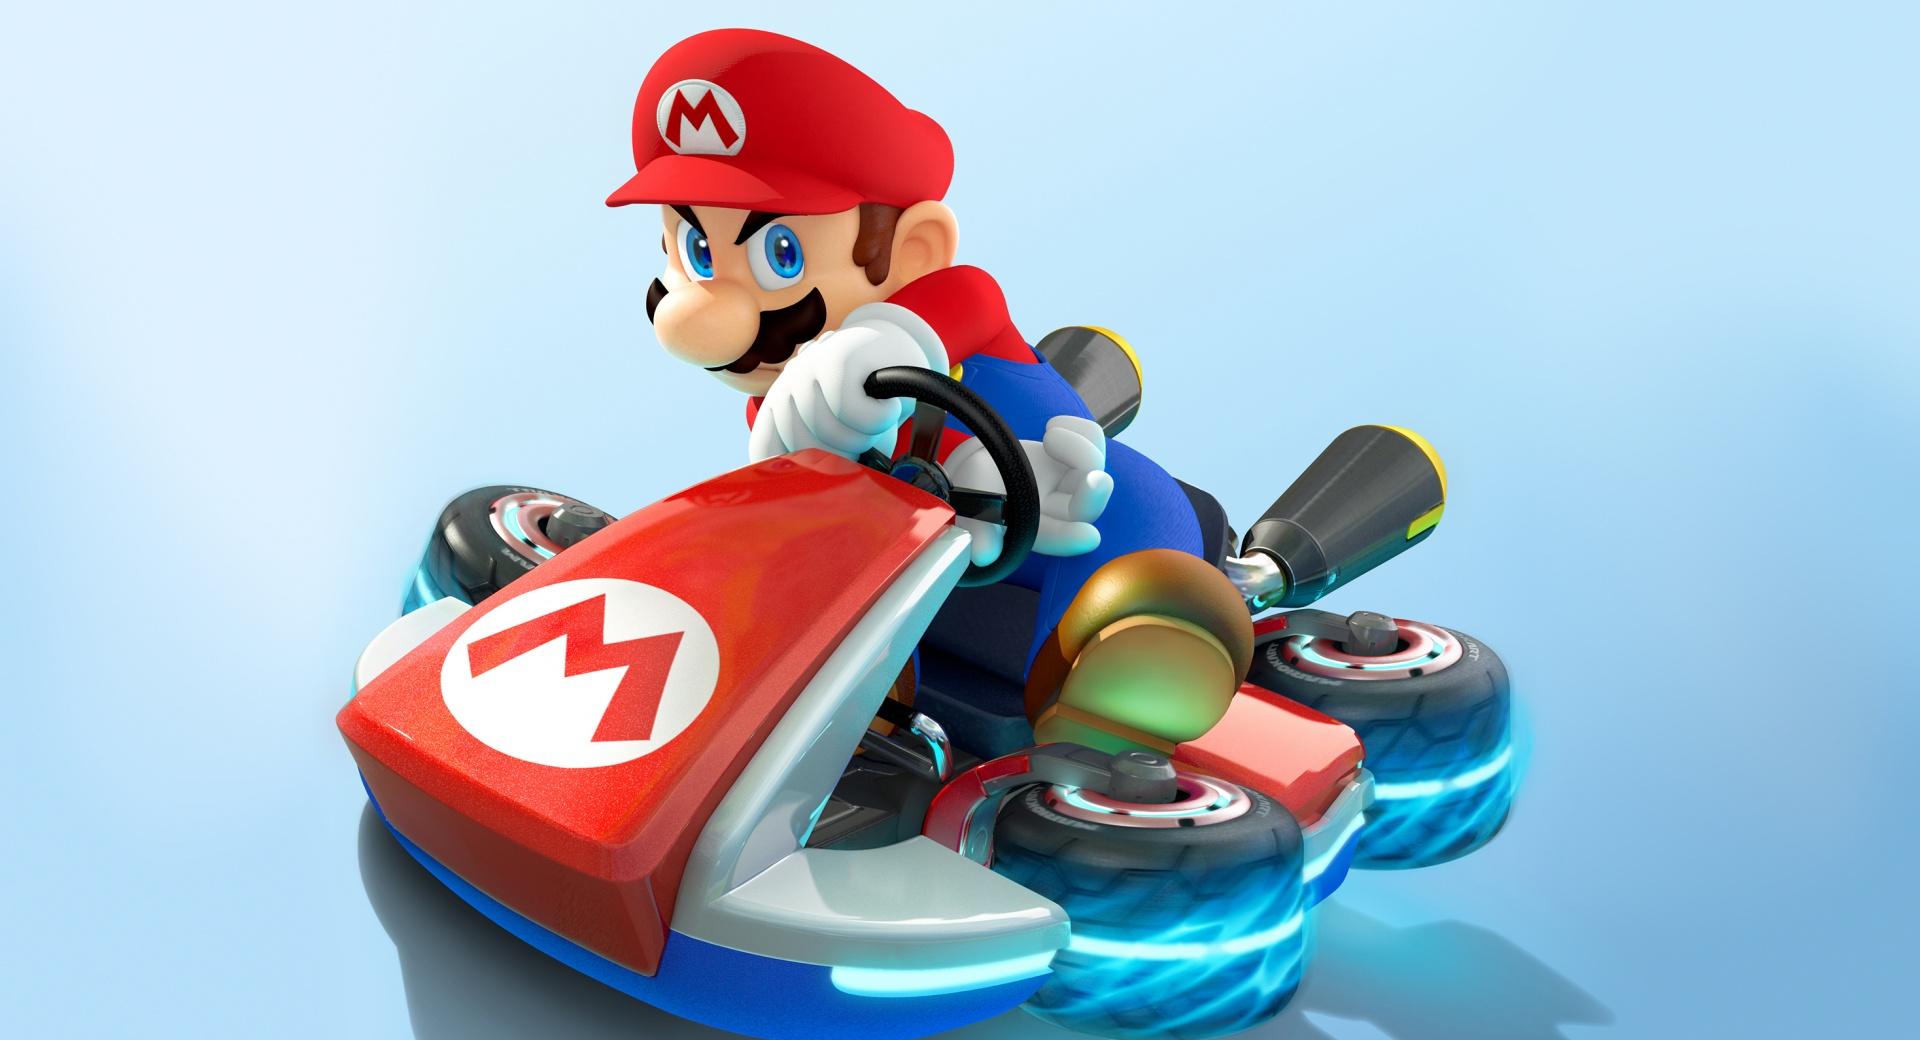 Mario Kart 8 - Mario at 1024 x 1024 iPad size wallpapers HD quality